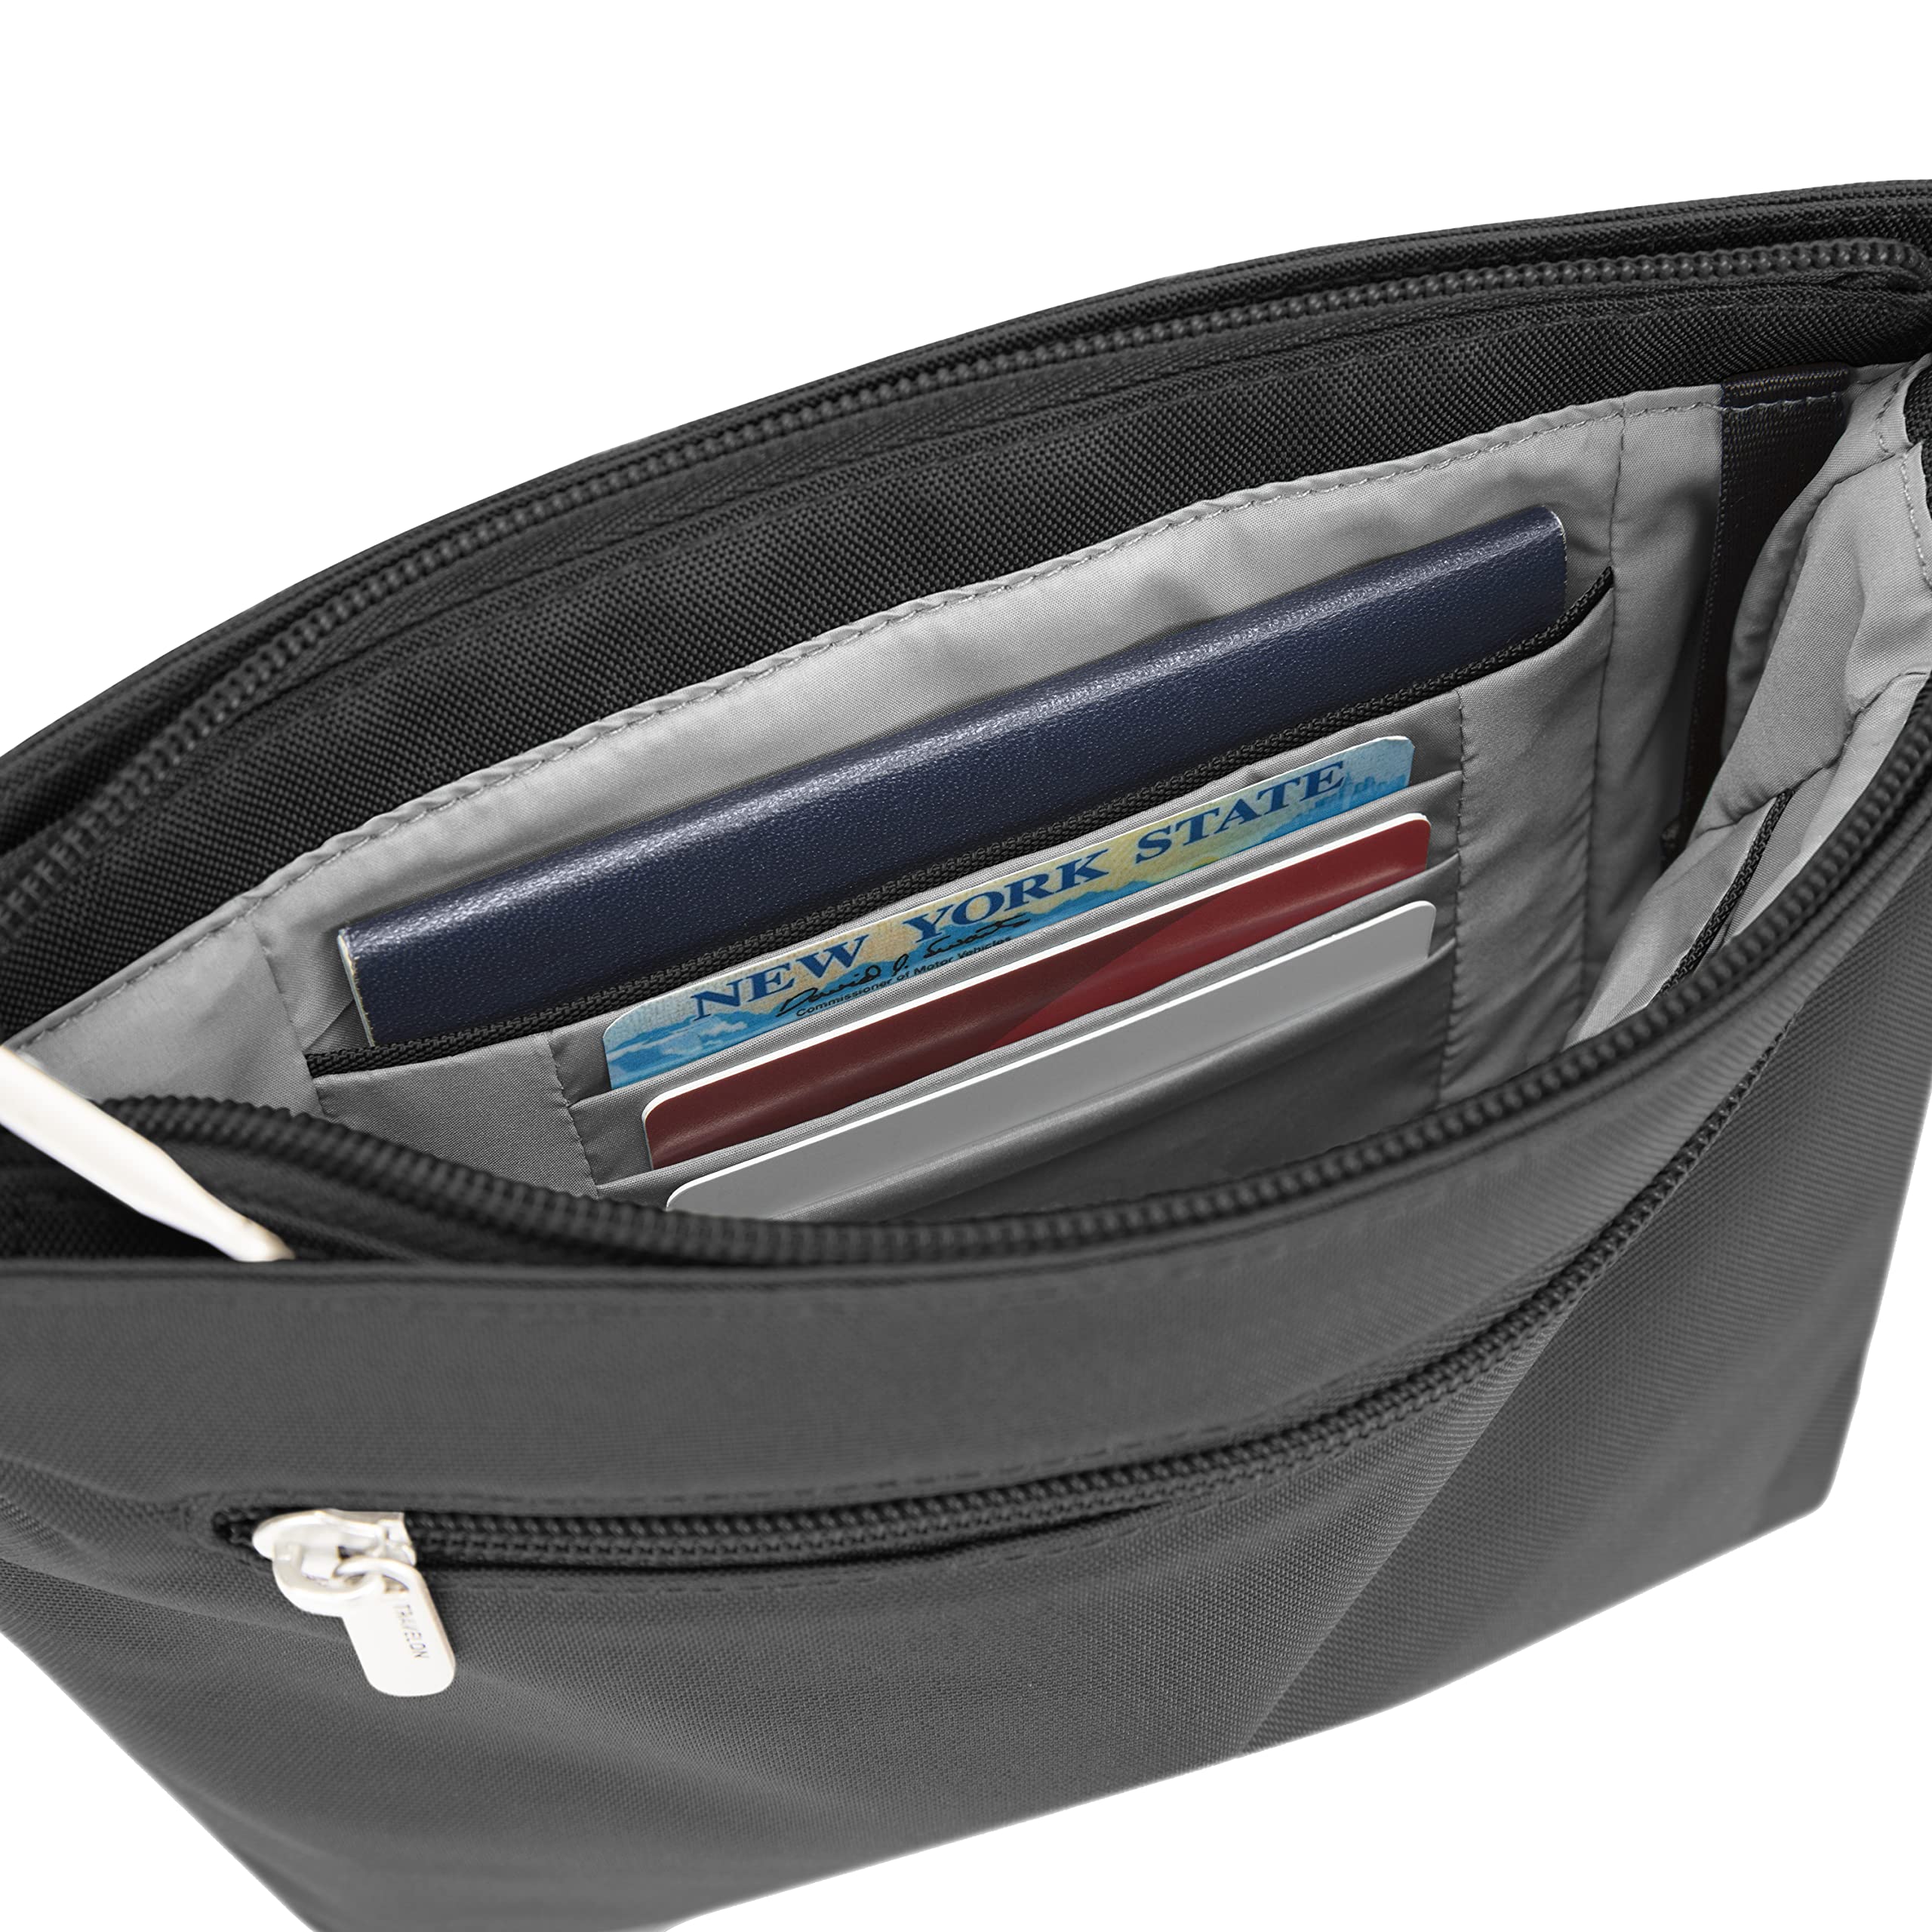 Travelon Anti-Theft Classic Mini Shoulder Bag, Black, One Size, 8.5 x 8.5 x 2